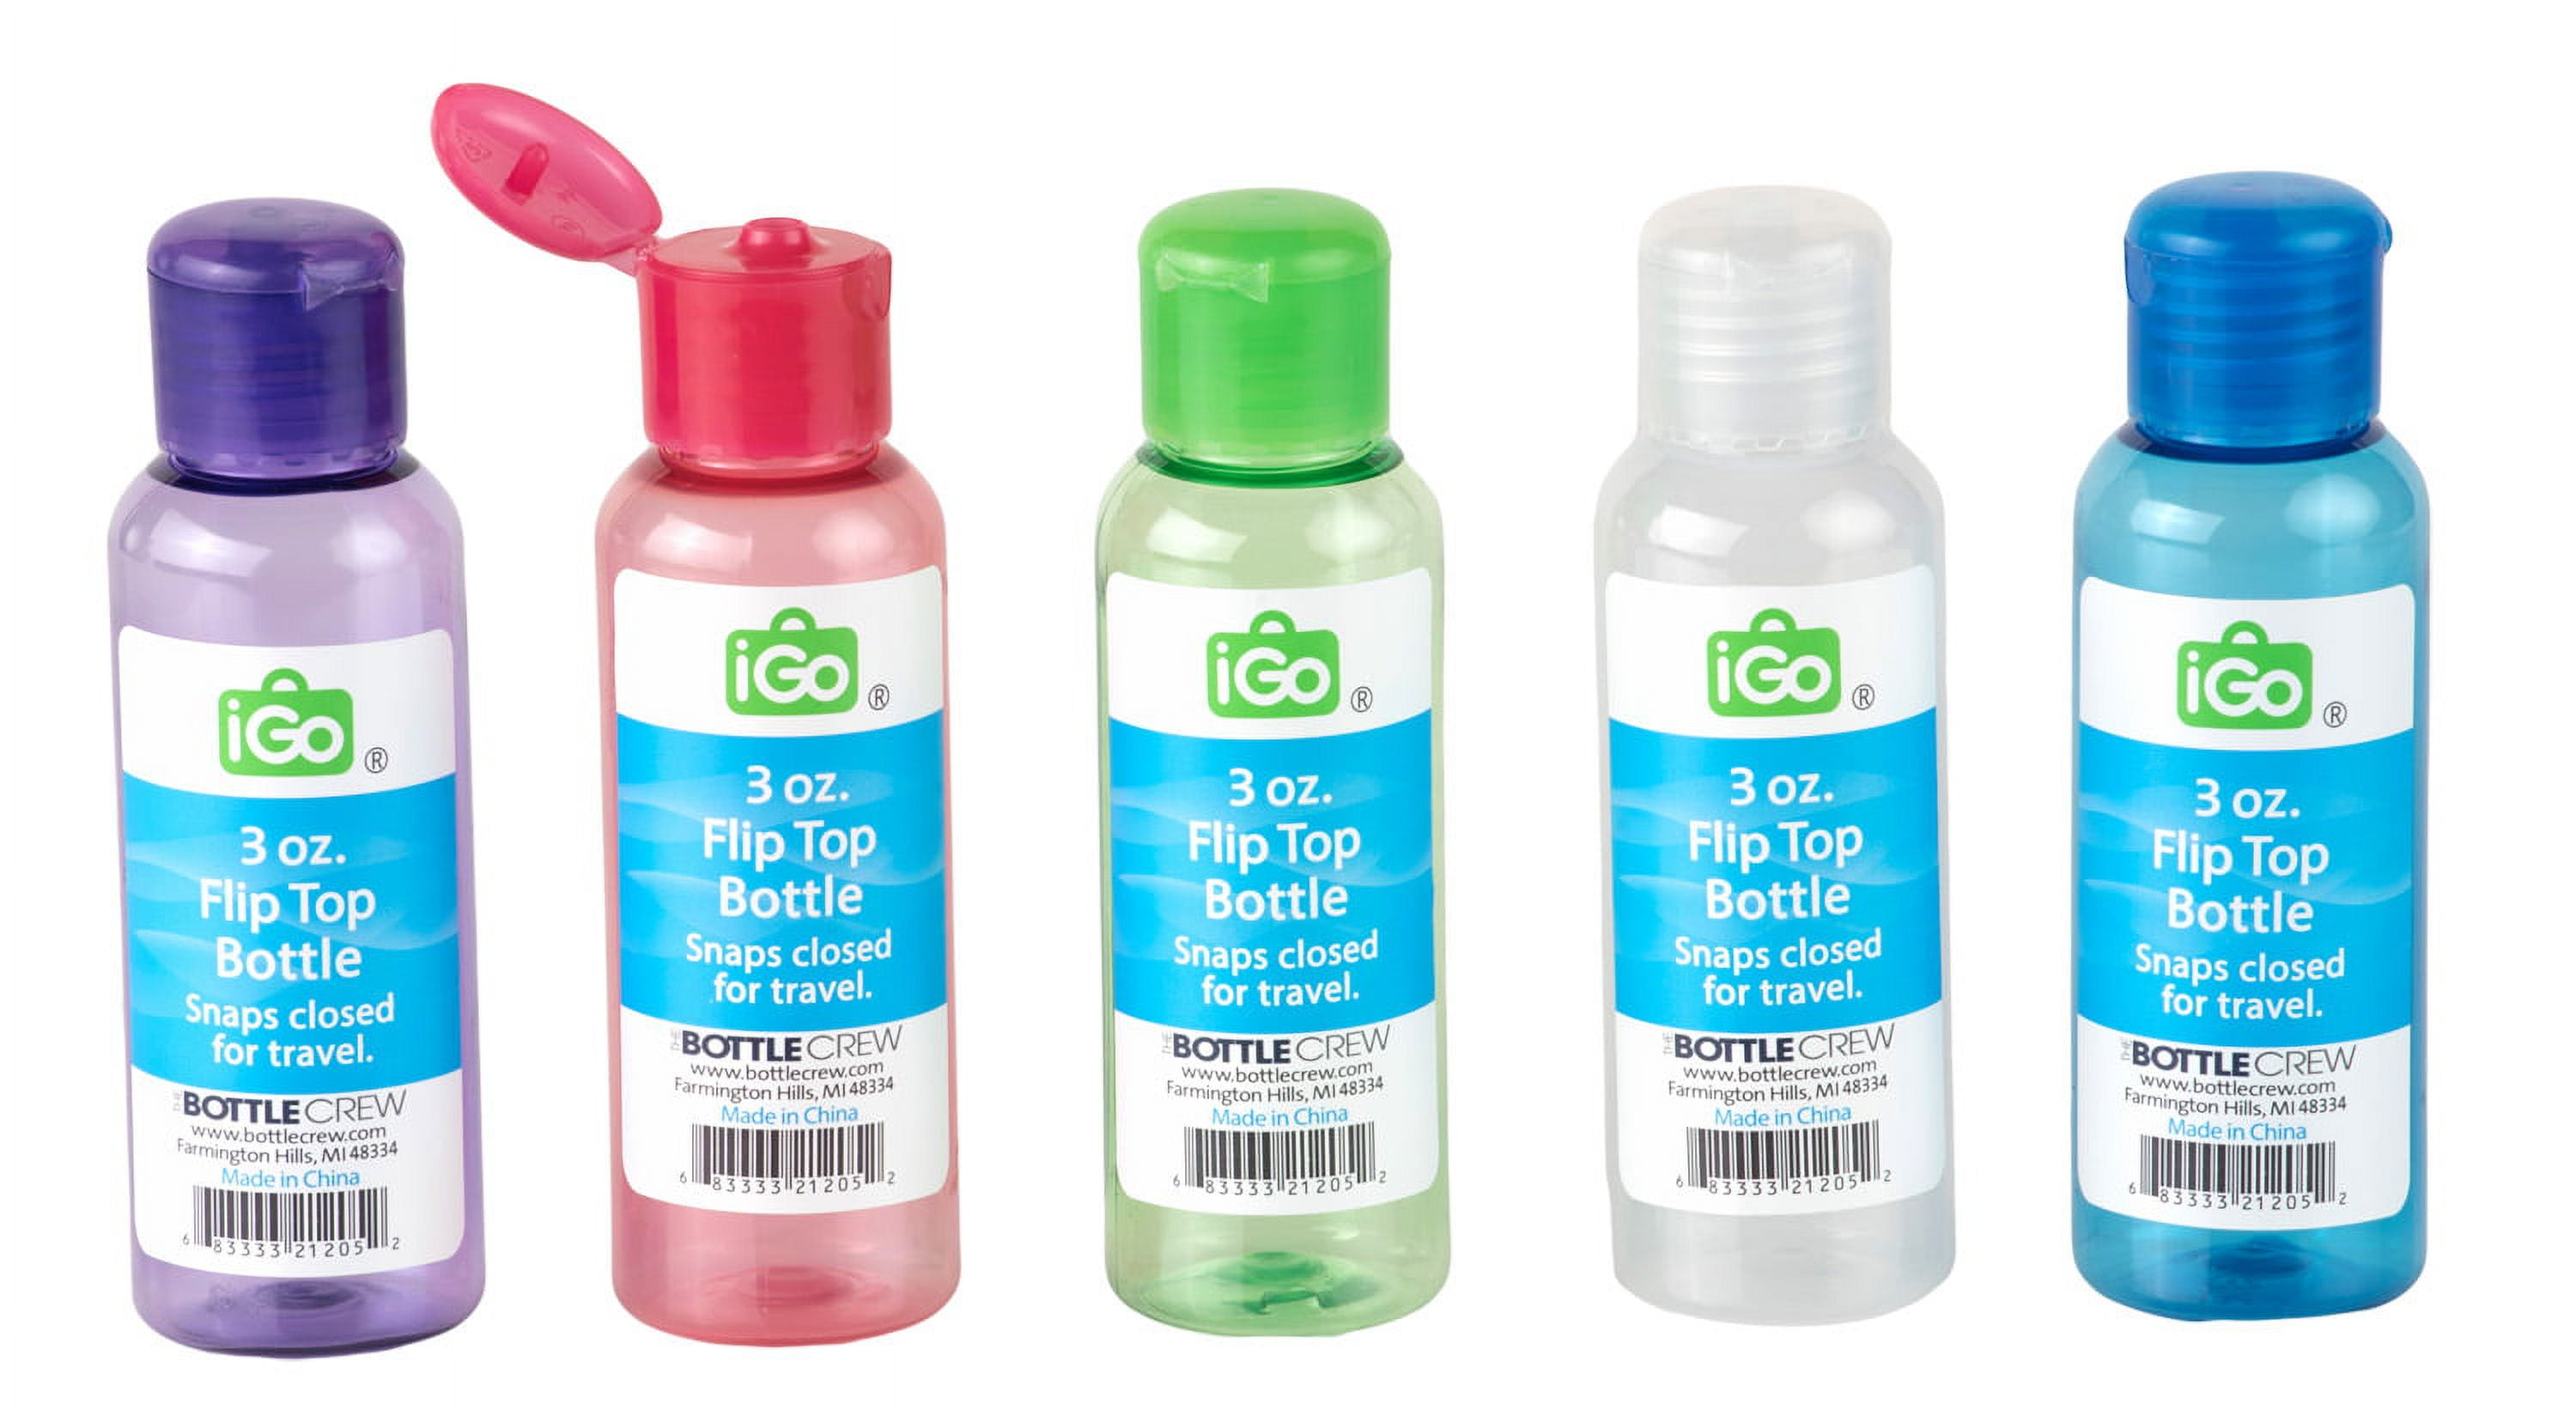 Igo Silicone 3 oz Travel Bottles with Reusable Clear Bag, 4 Count